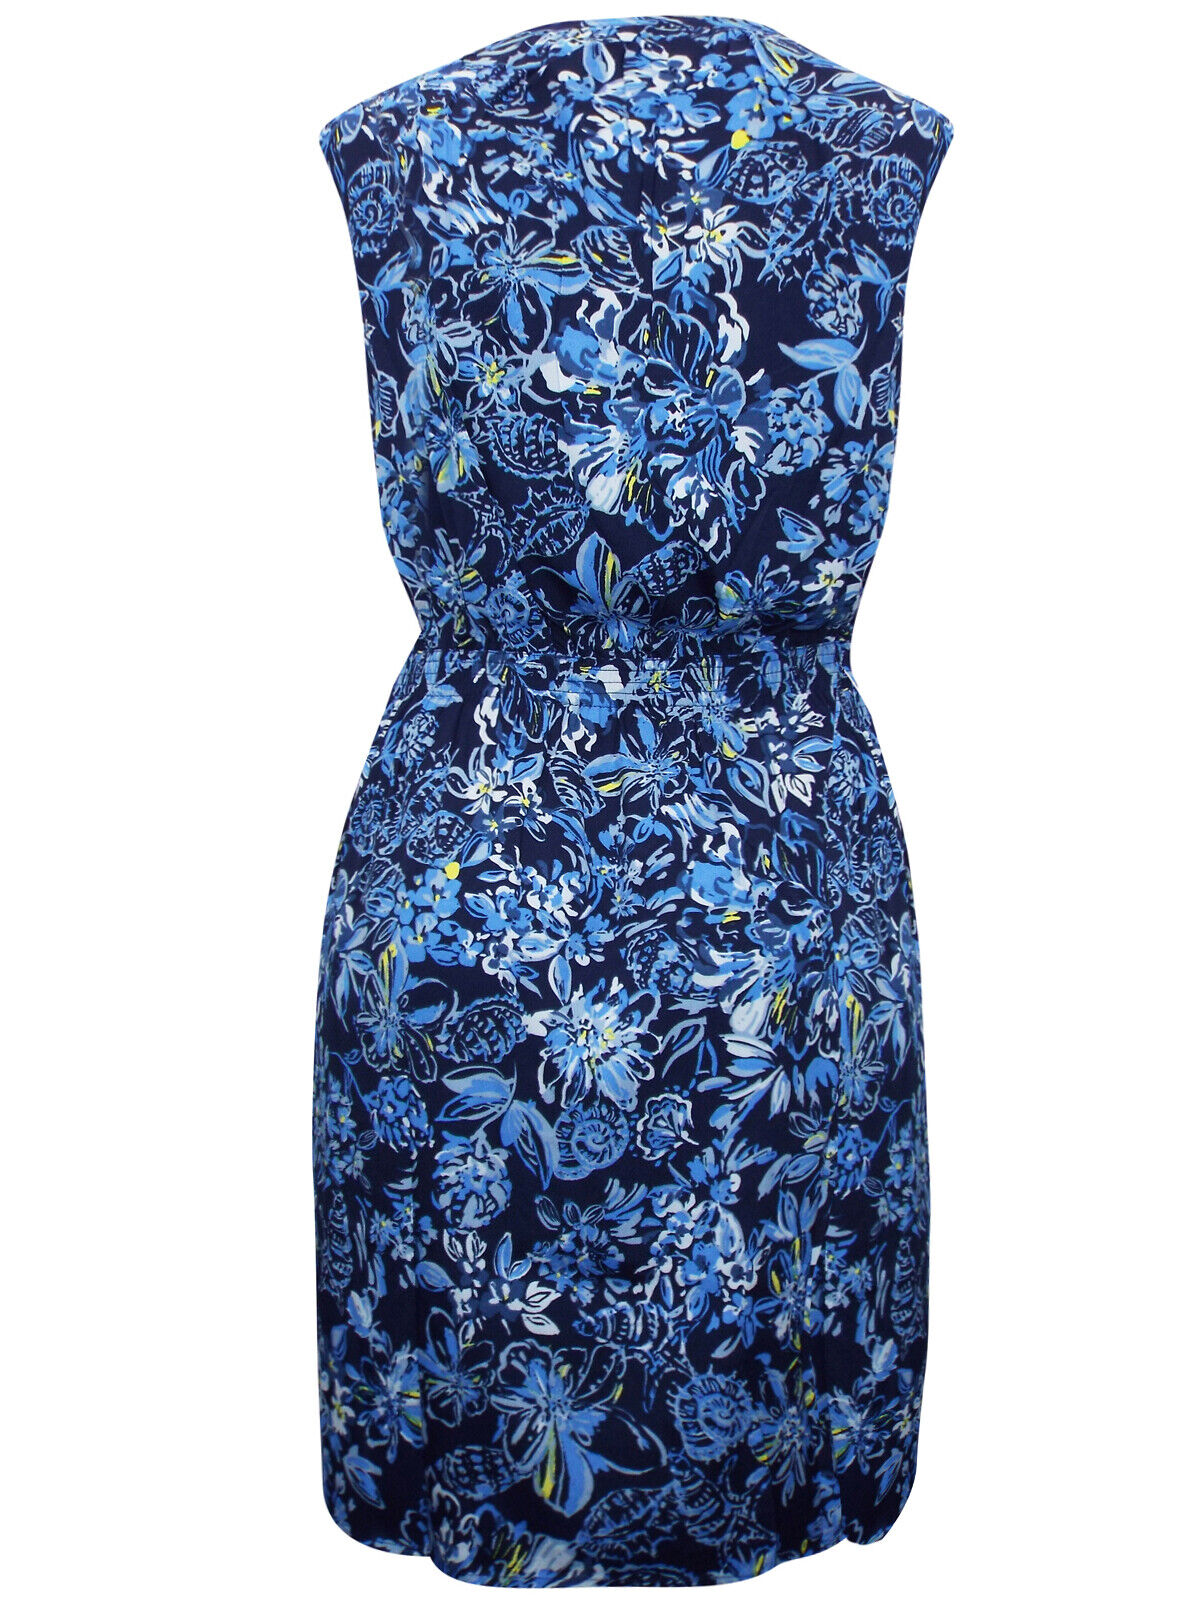 Jessica London Navy Sleeveless Floral Print Shirred Waist Dress Sizes 20 or 28